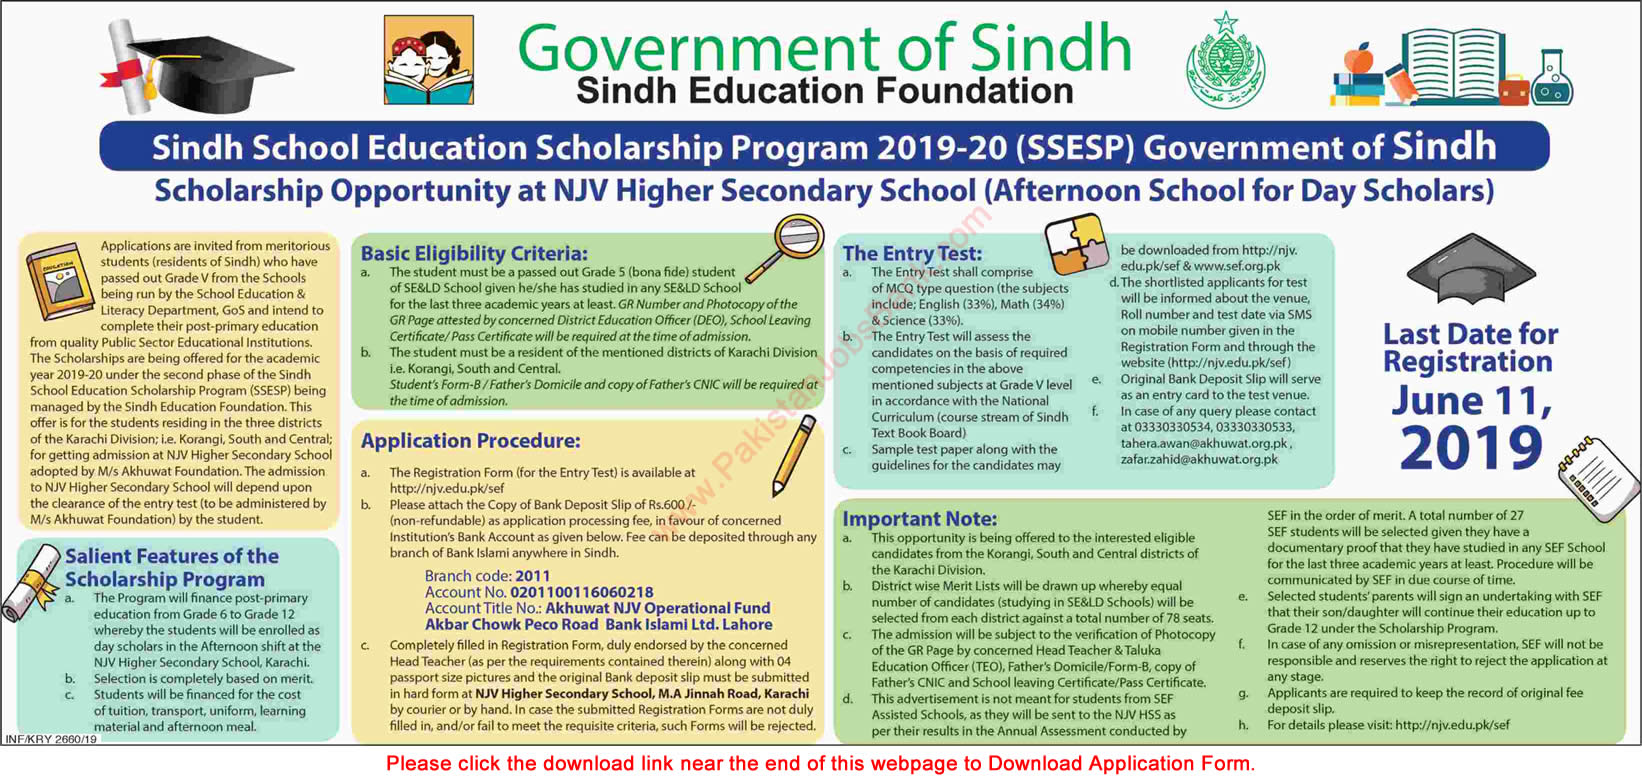 Sindh School Education Scholarship Program 2019-20 Application Form Sindh Education Foundation SSESP Latest